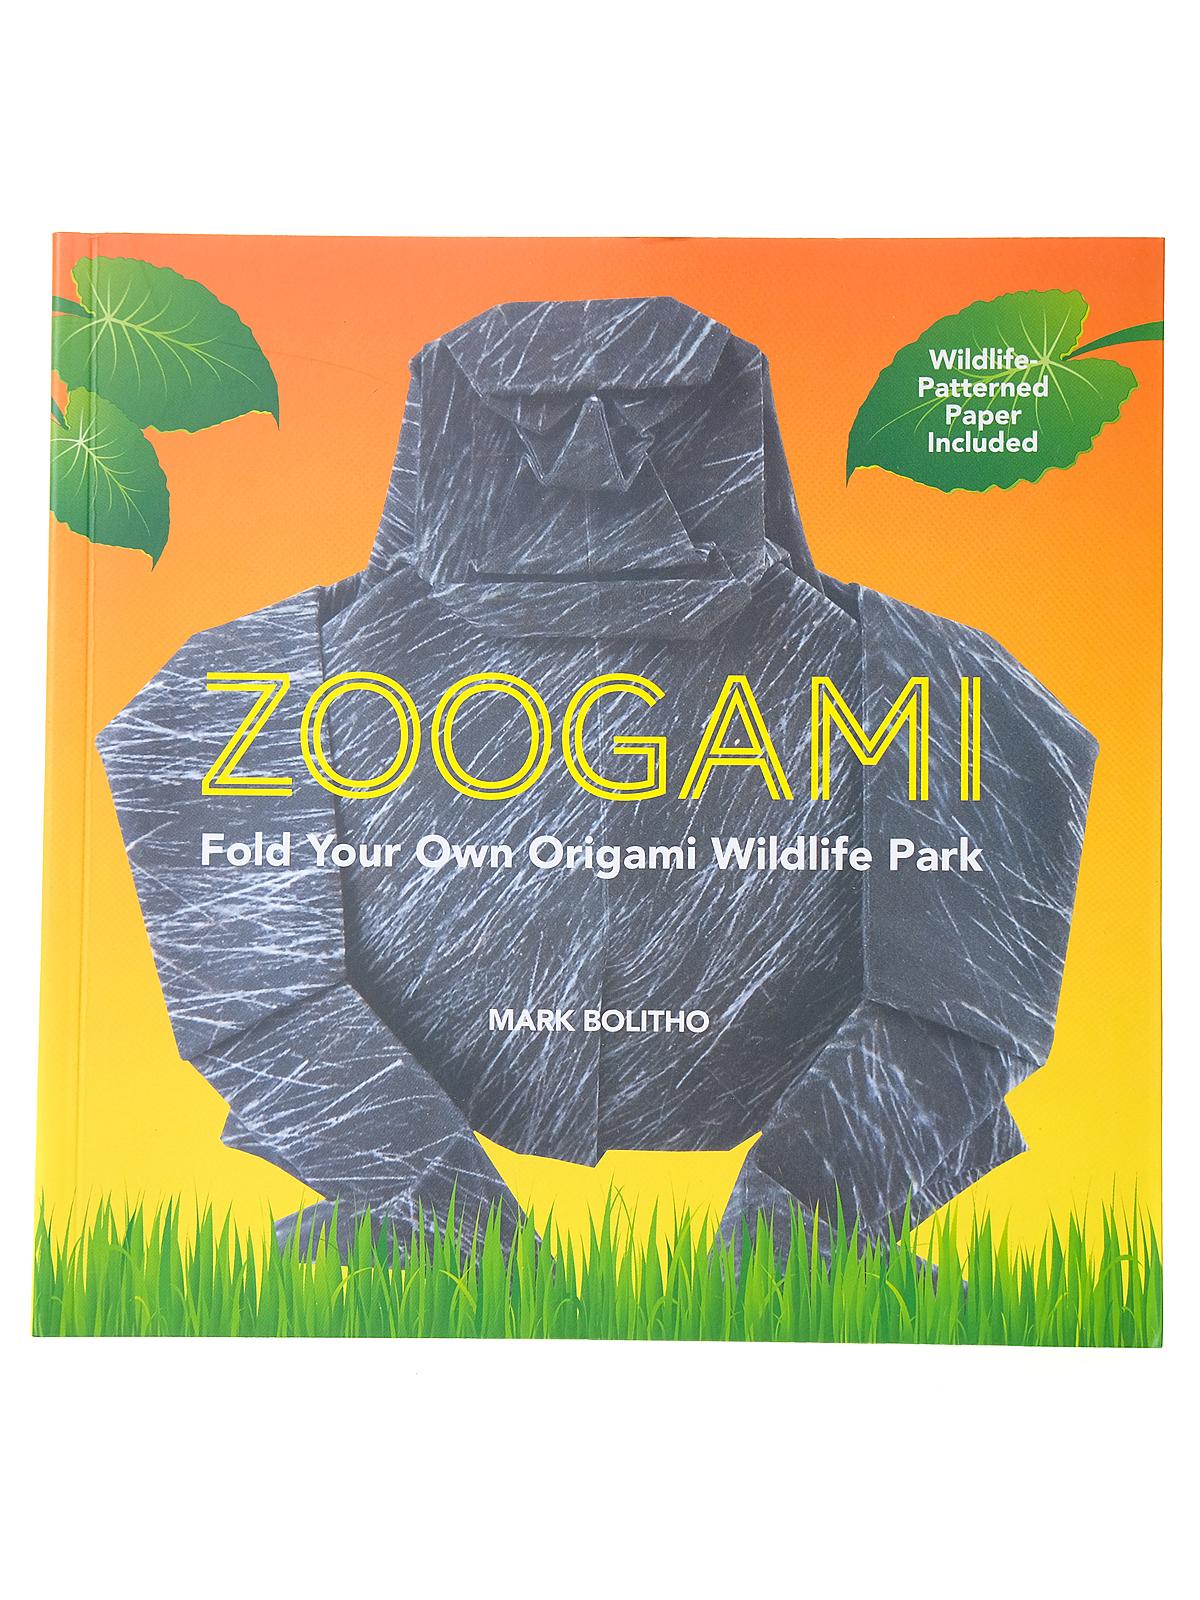 Zoogami Each